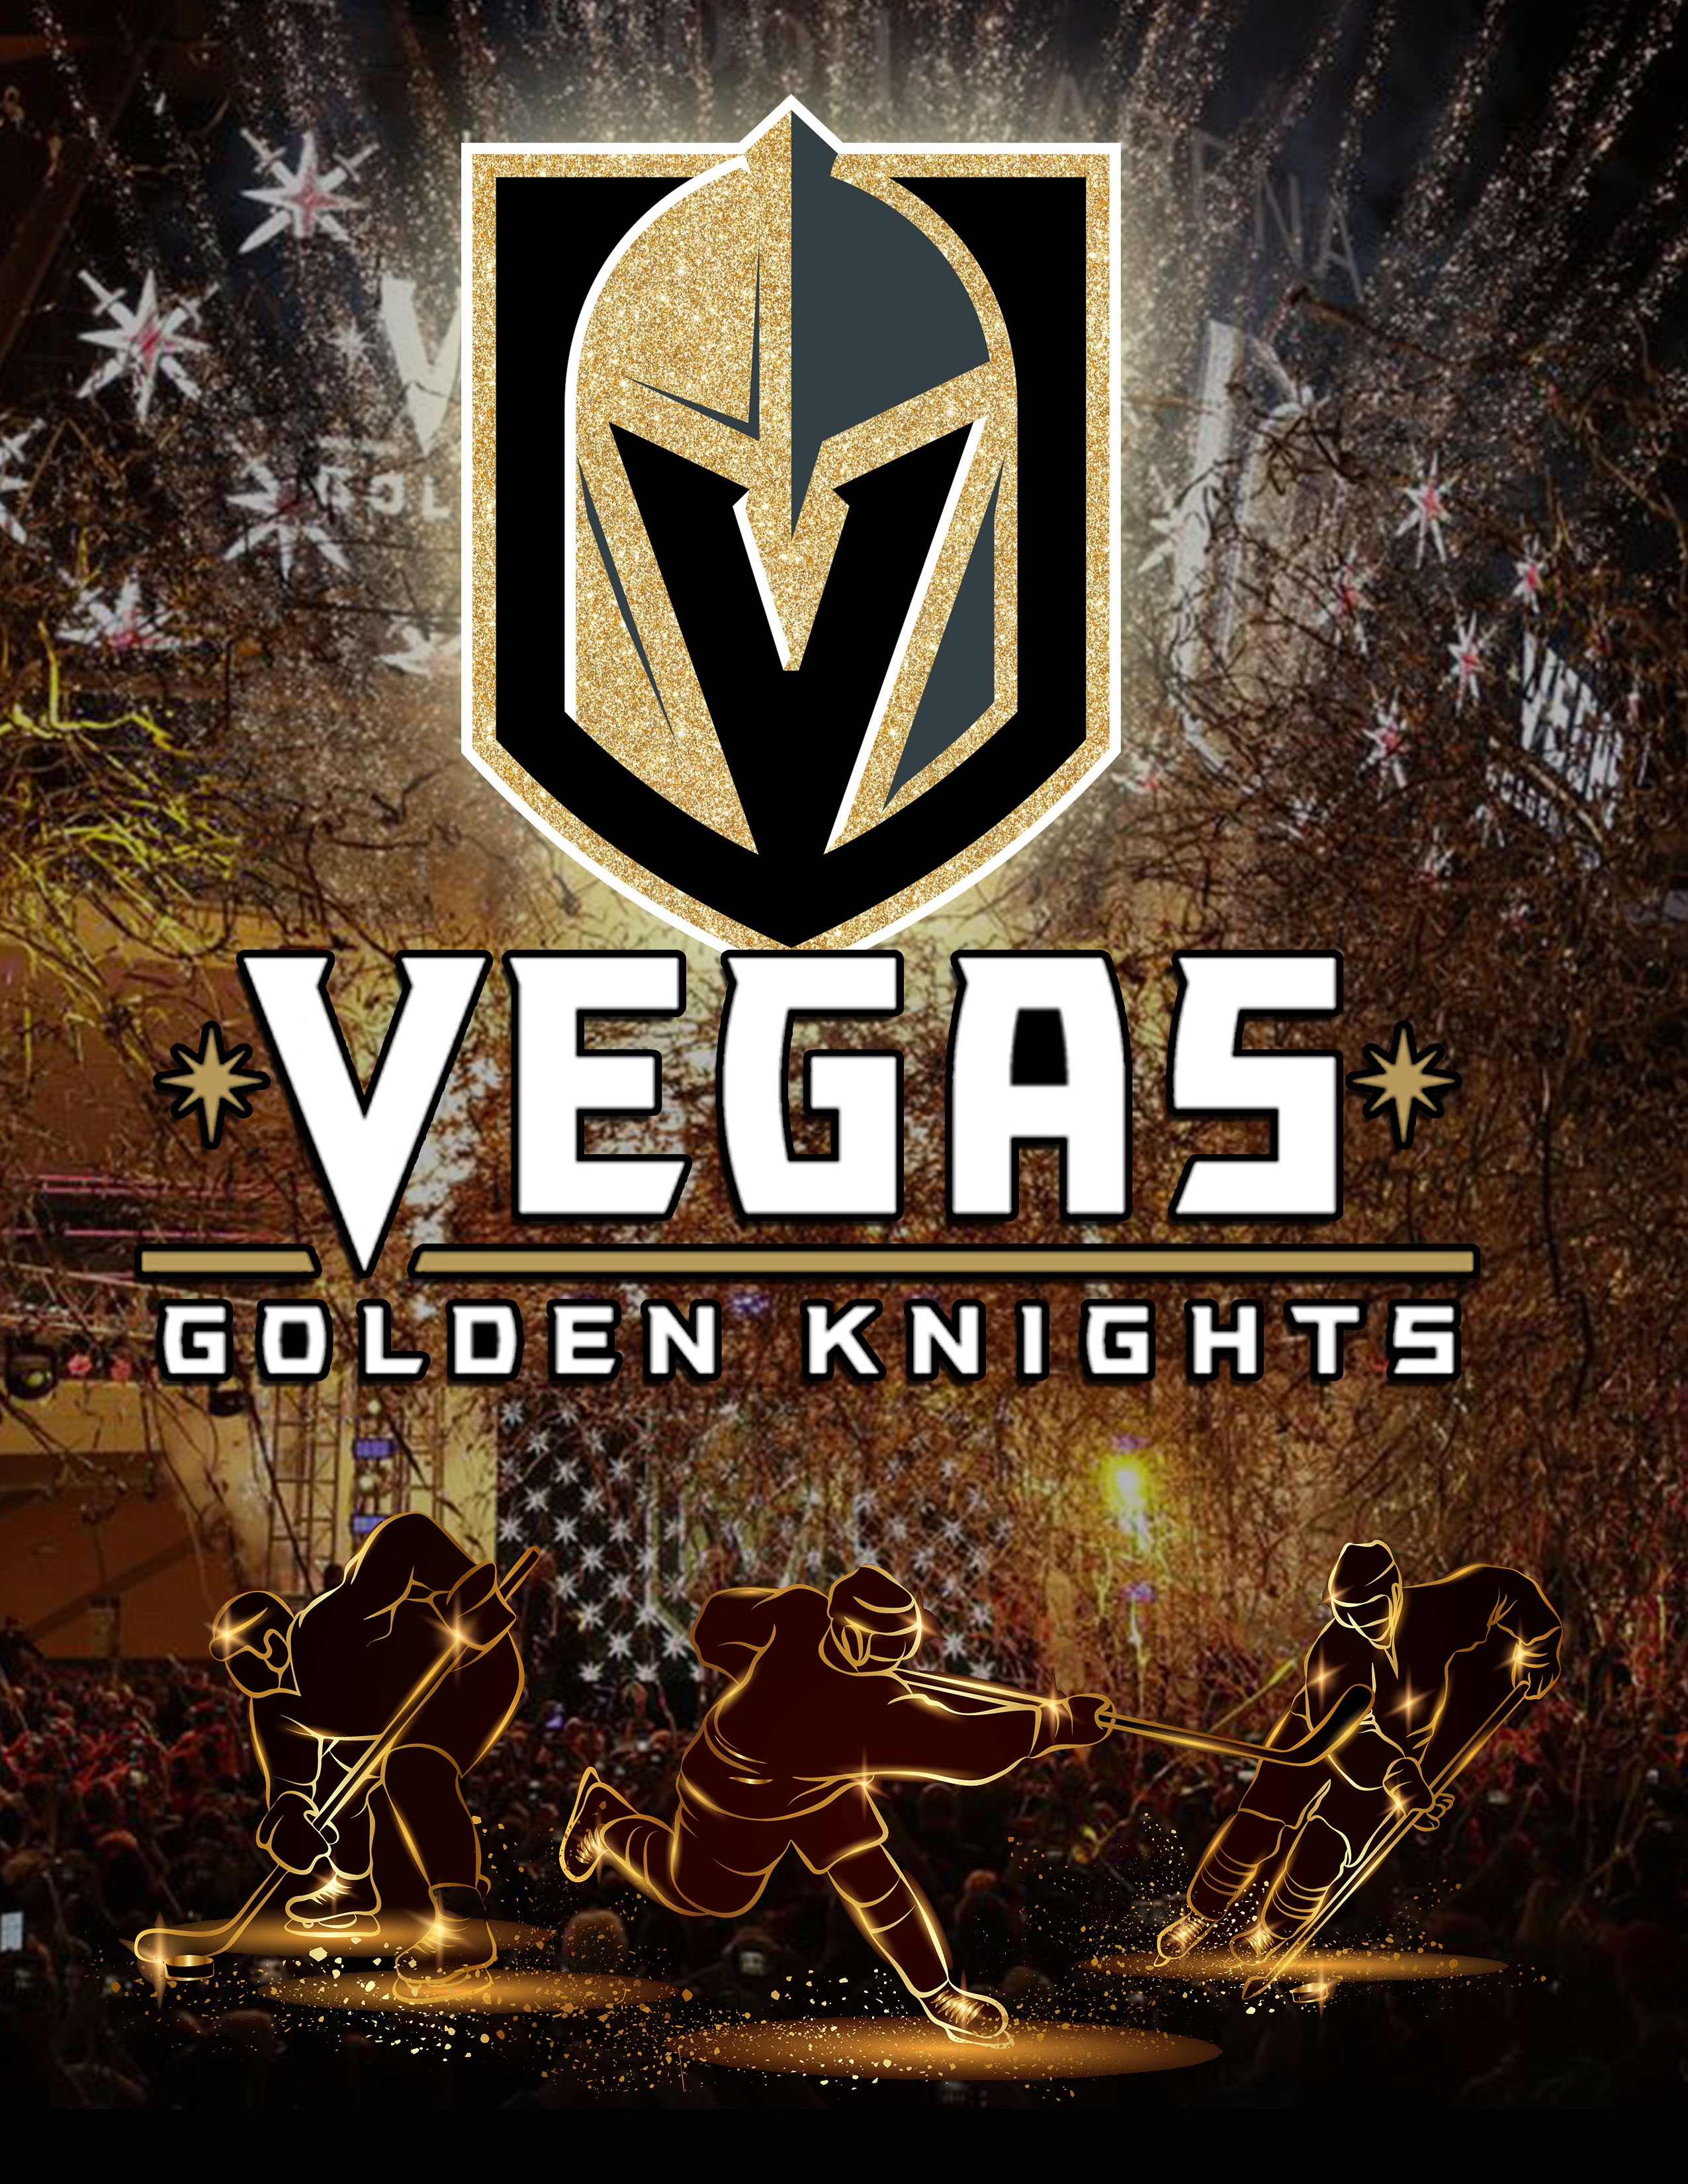 Vegas Golden Knights on. Vegas golden knights, Golden knights